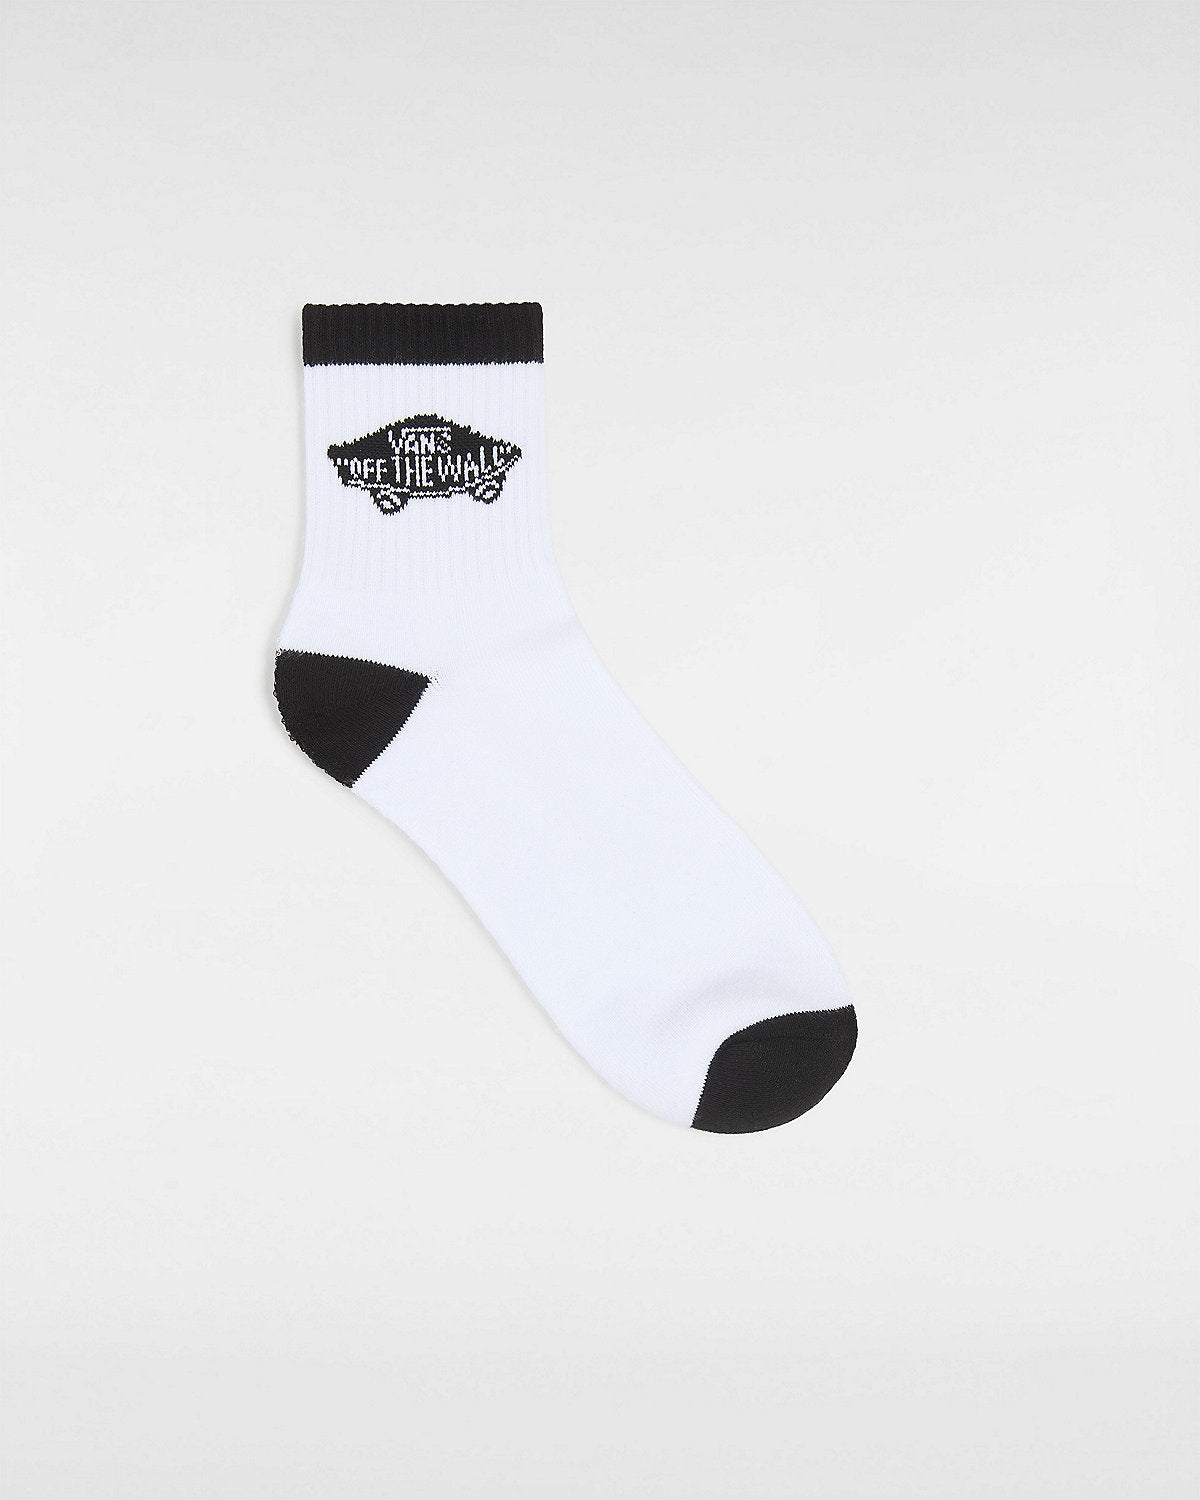 VANS Mens Art Half Crew Socks (1 Pair) - White / Black